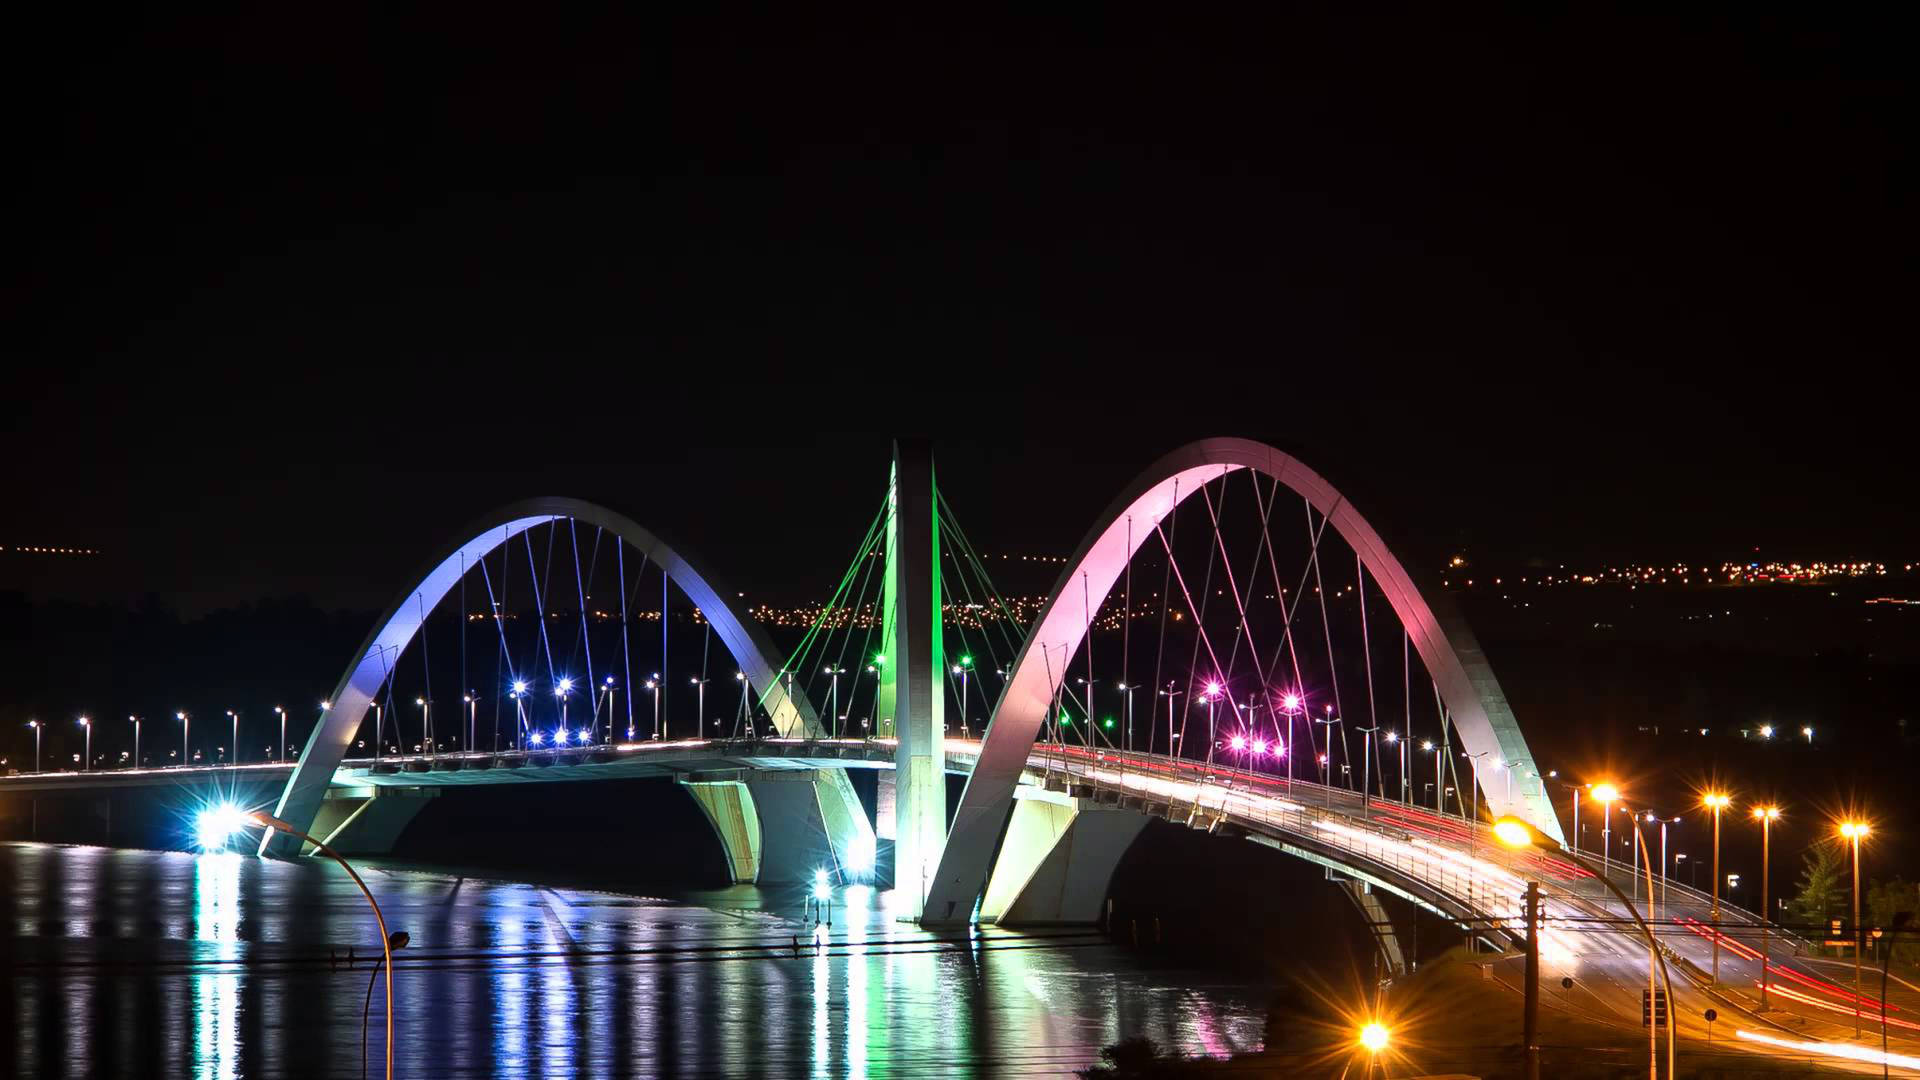 Scenic view of the iconic Juscelino Kubitschek Bridge in Brazil Wallpaper